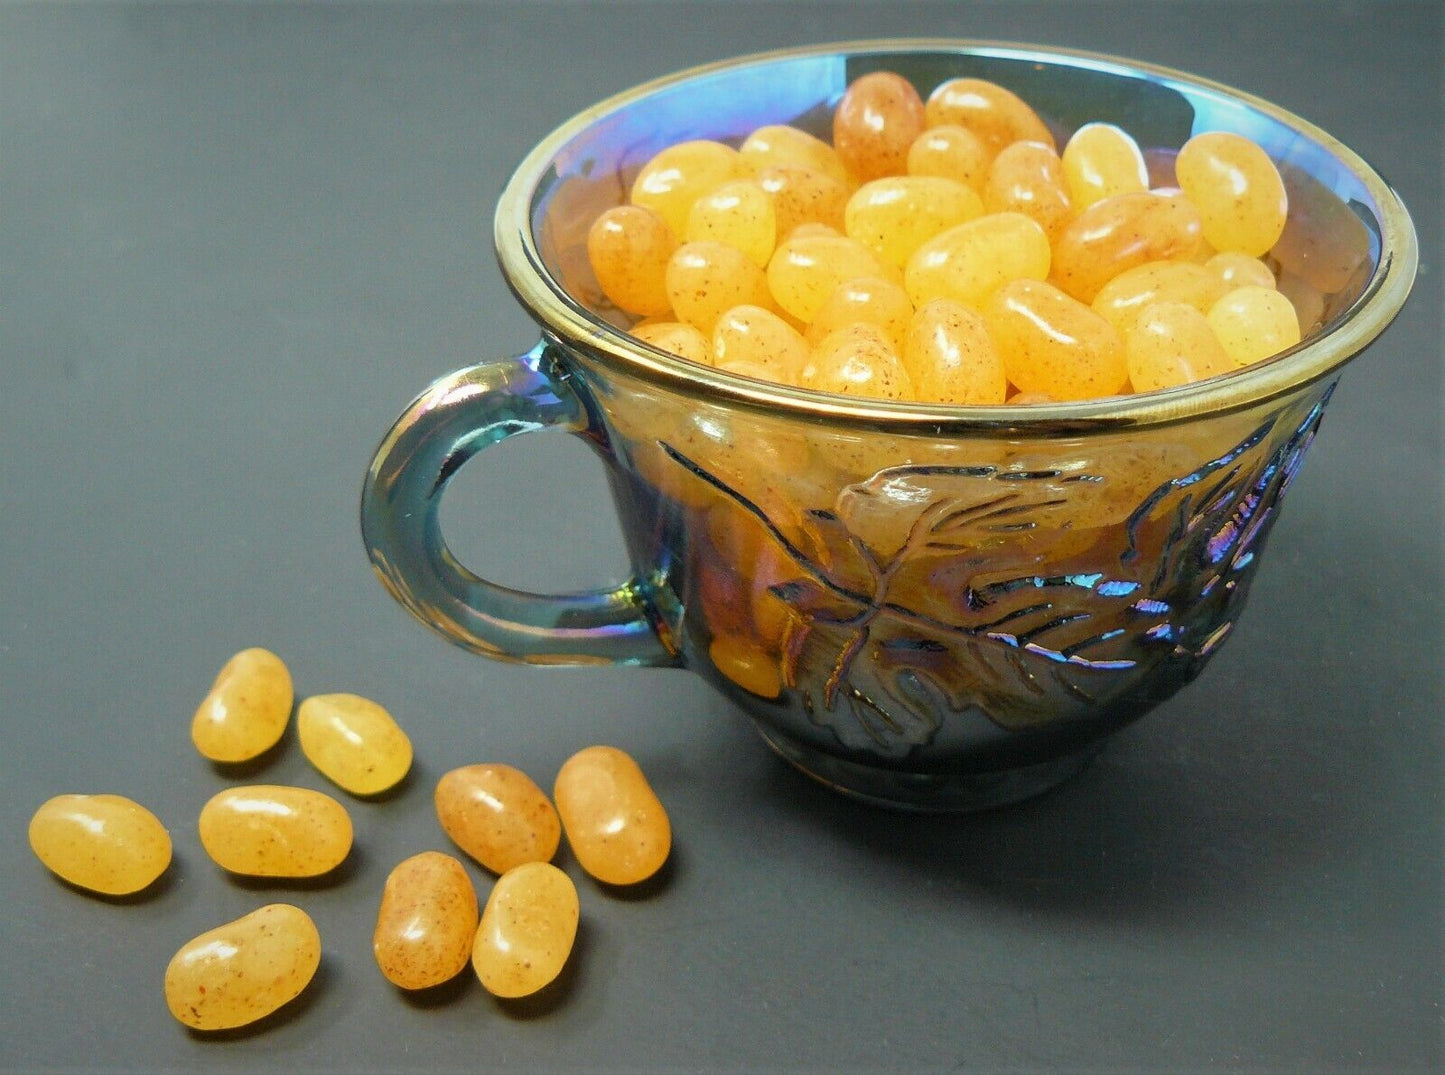 Chili Mango Jelly Beans